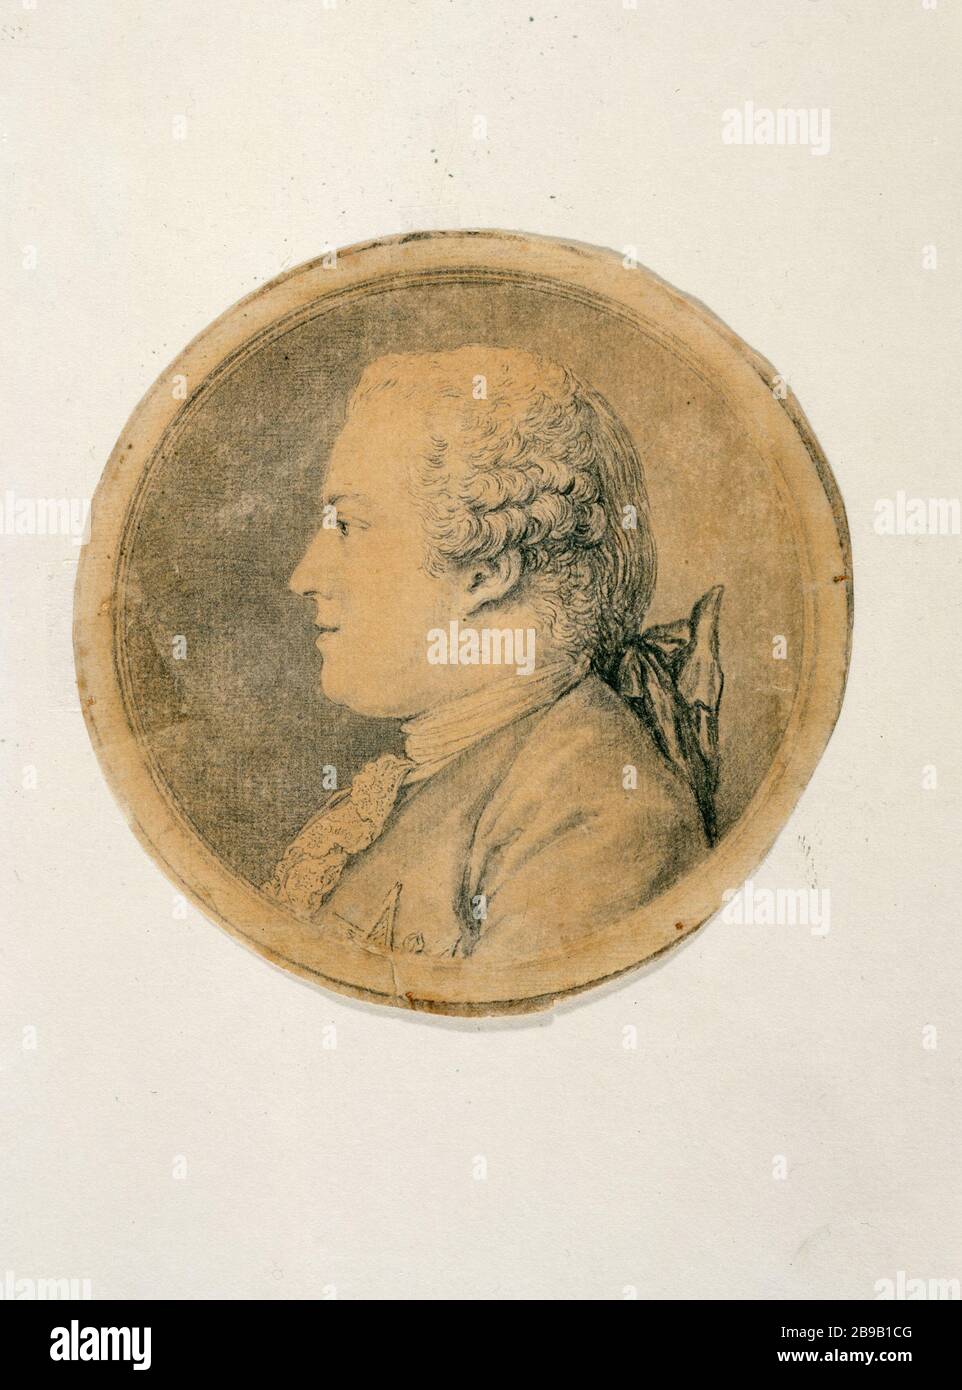 MARIGNY, ARCHITECT Charles-Nicolas Cochin (1715-1790). 'Marigny, architecte'. Dessin. Paris, musée Carnavalet. Stock Photo